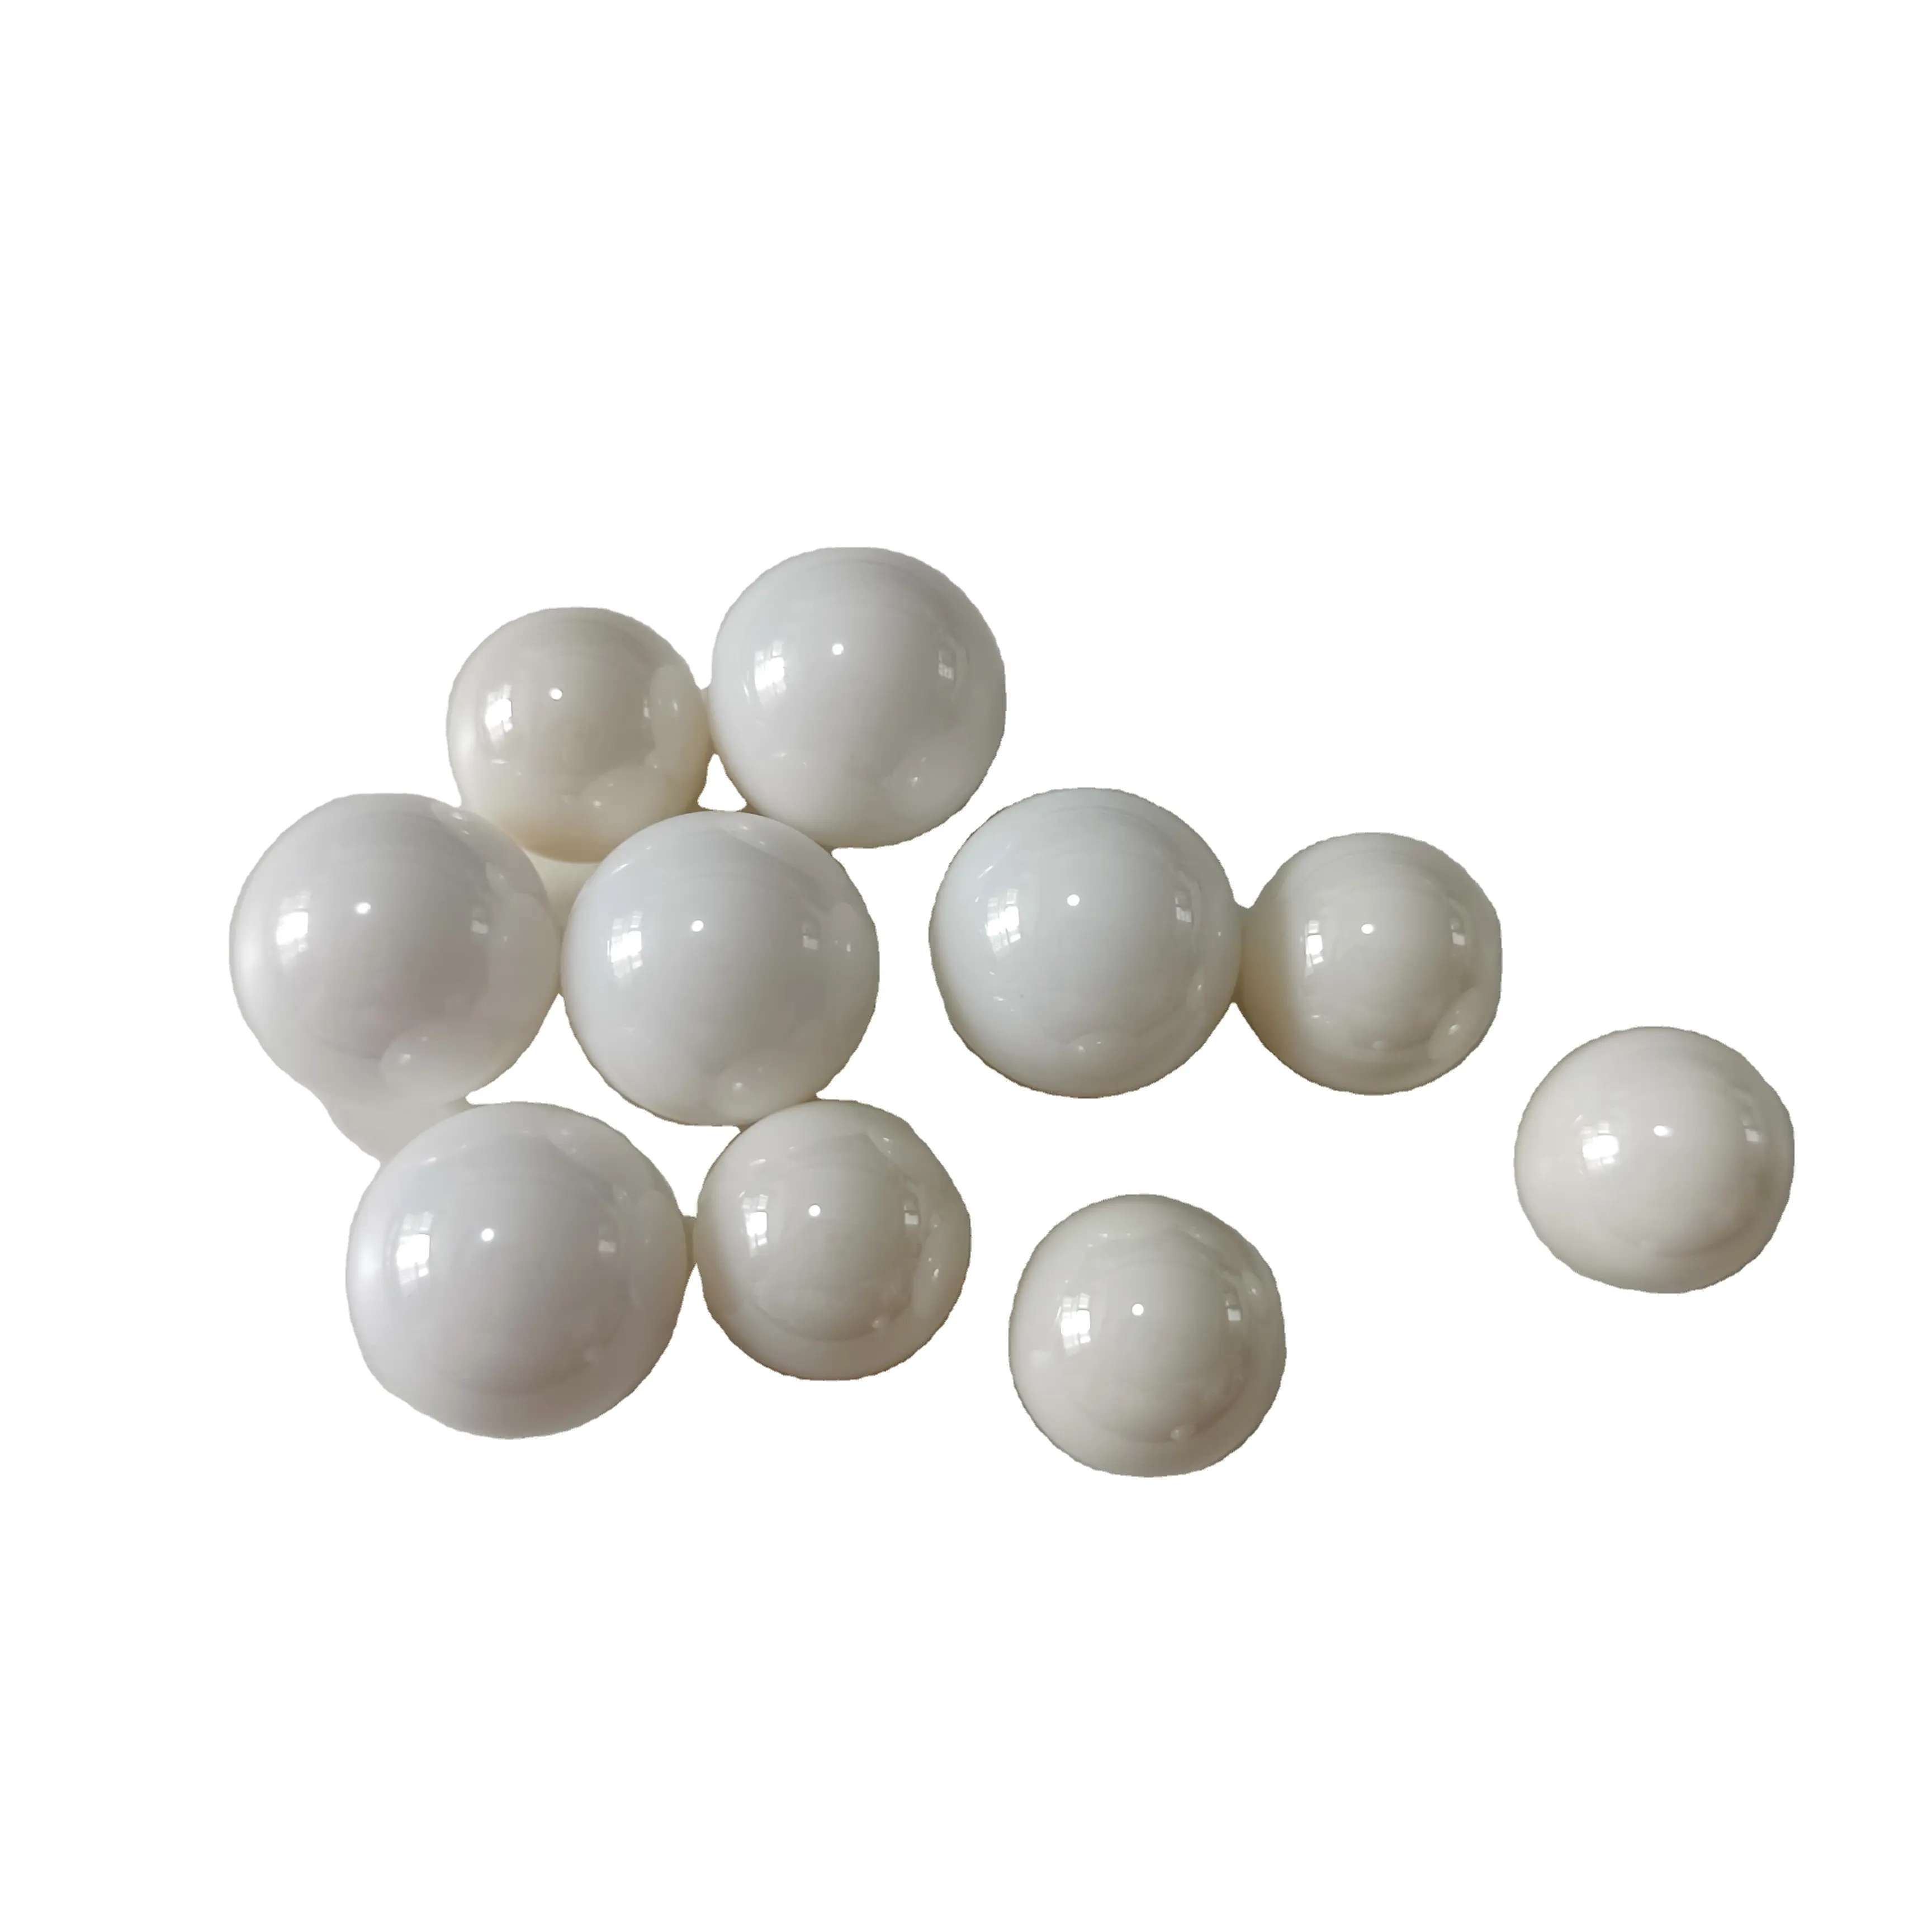 Direct Origin Delivery Ceramic balls P5 Precision Corrosion Resistance for Restaurant Industries